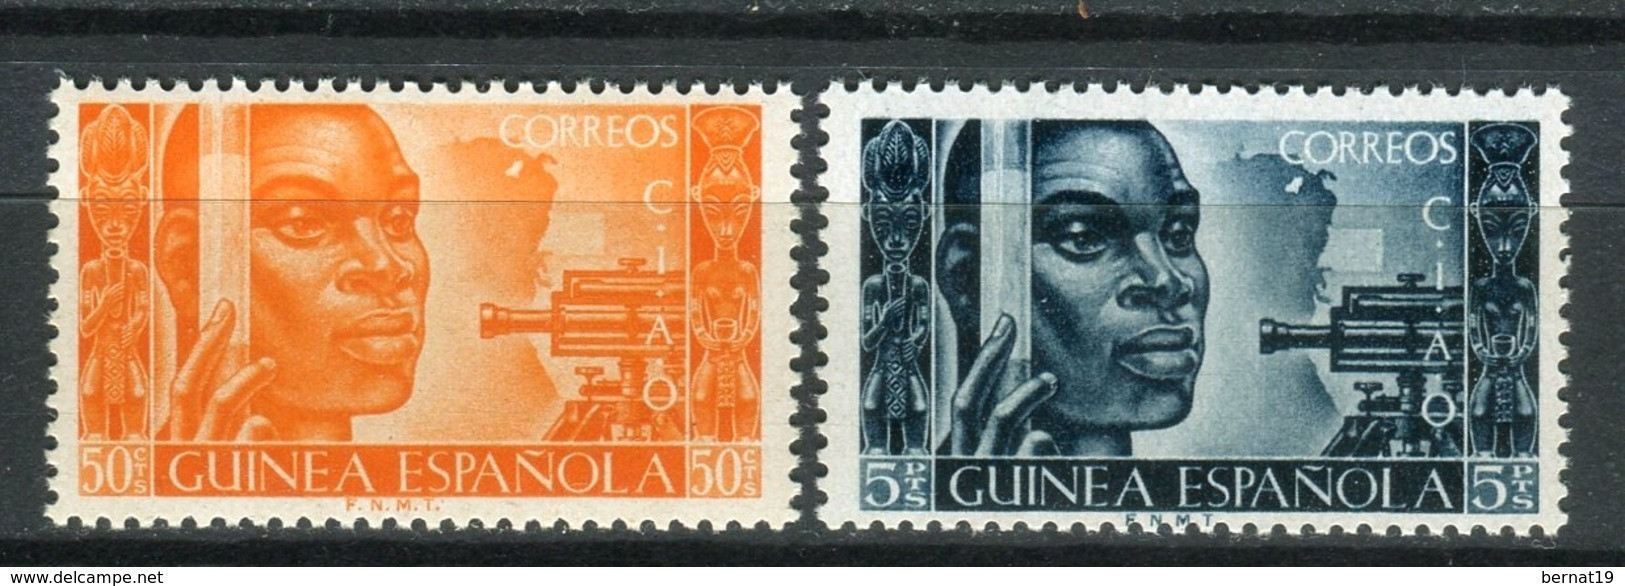 Guinea Española 1951. Edifil 309-10 ** MNH. - Guinea Española